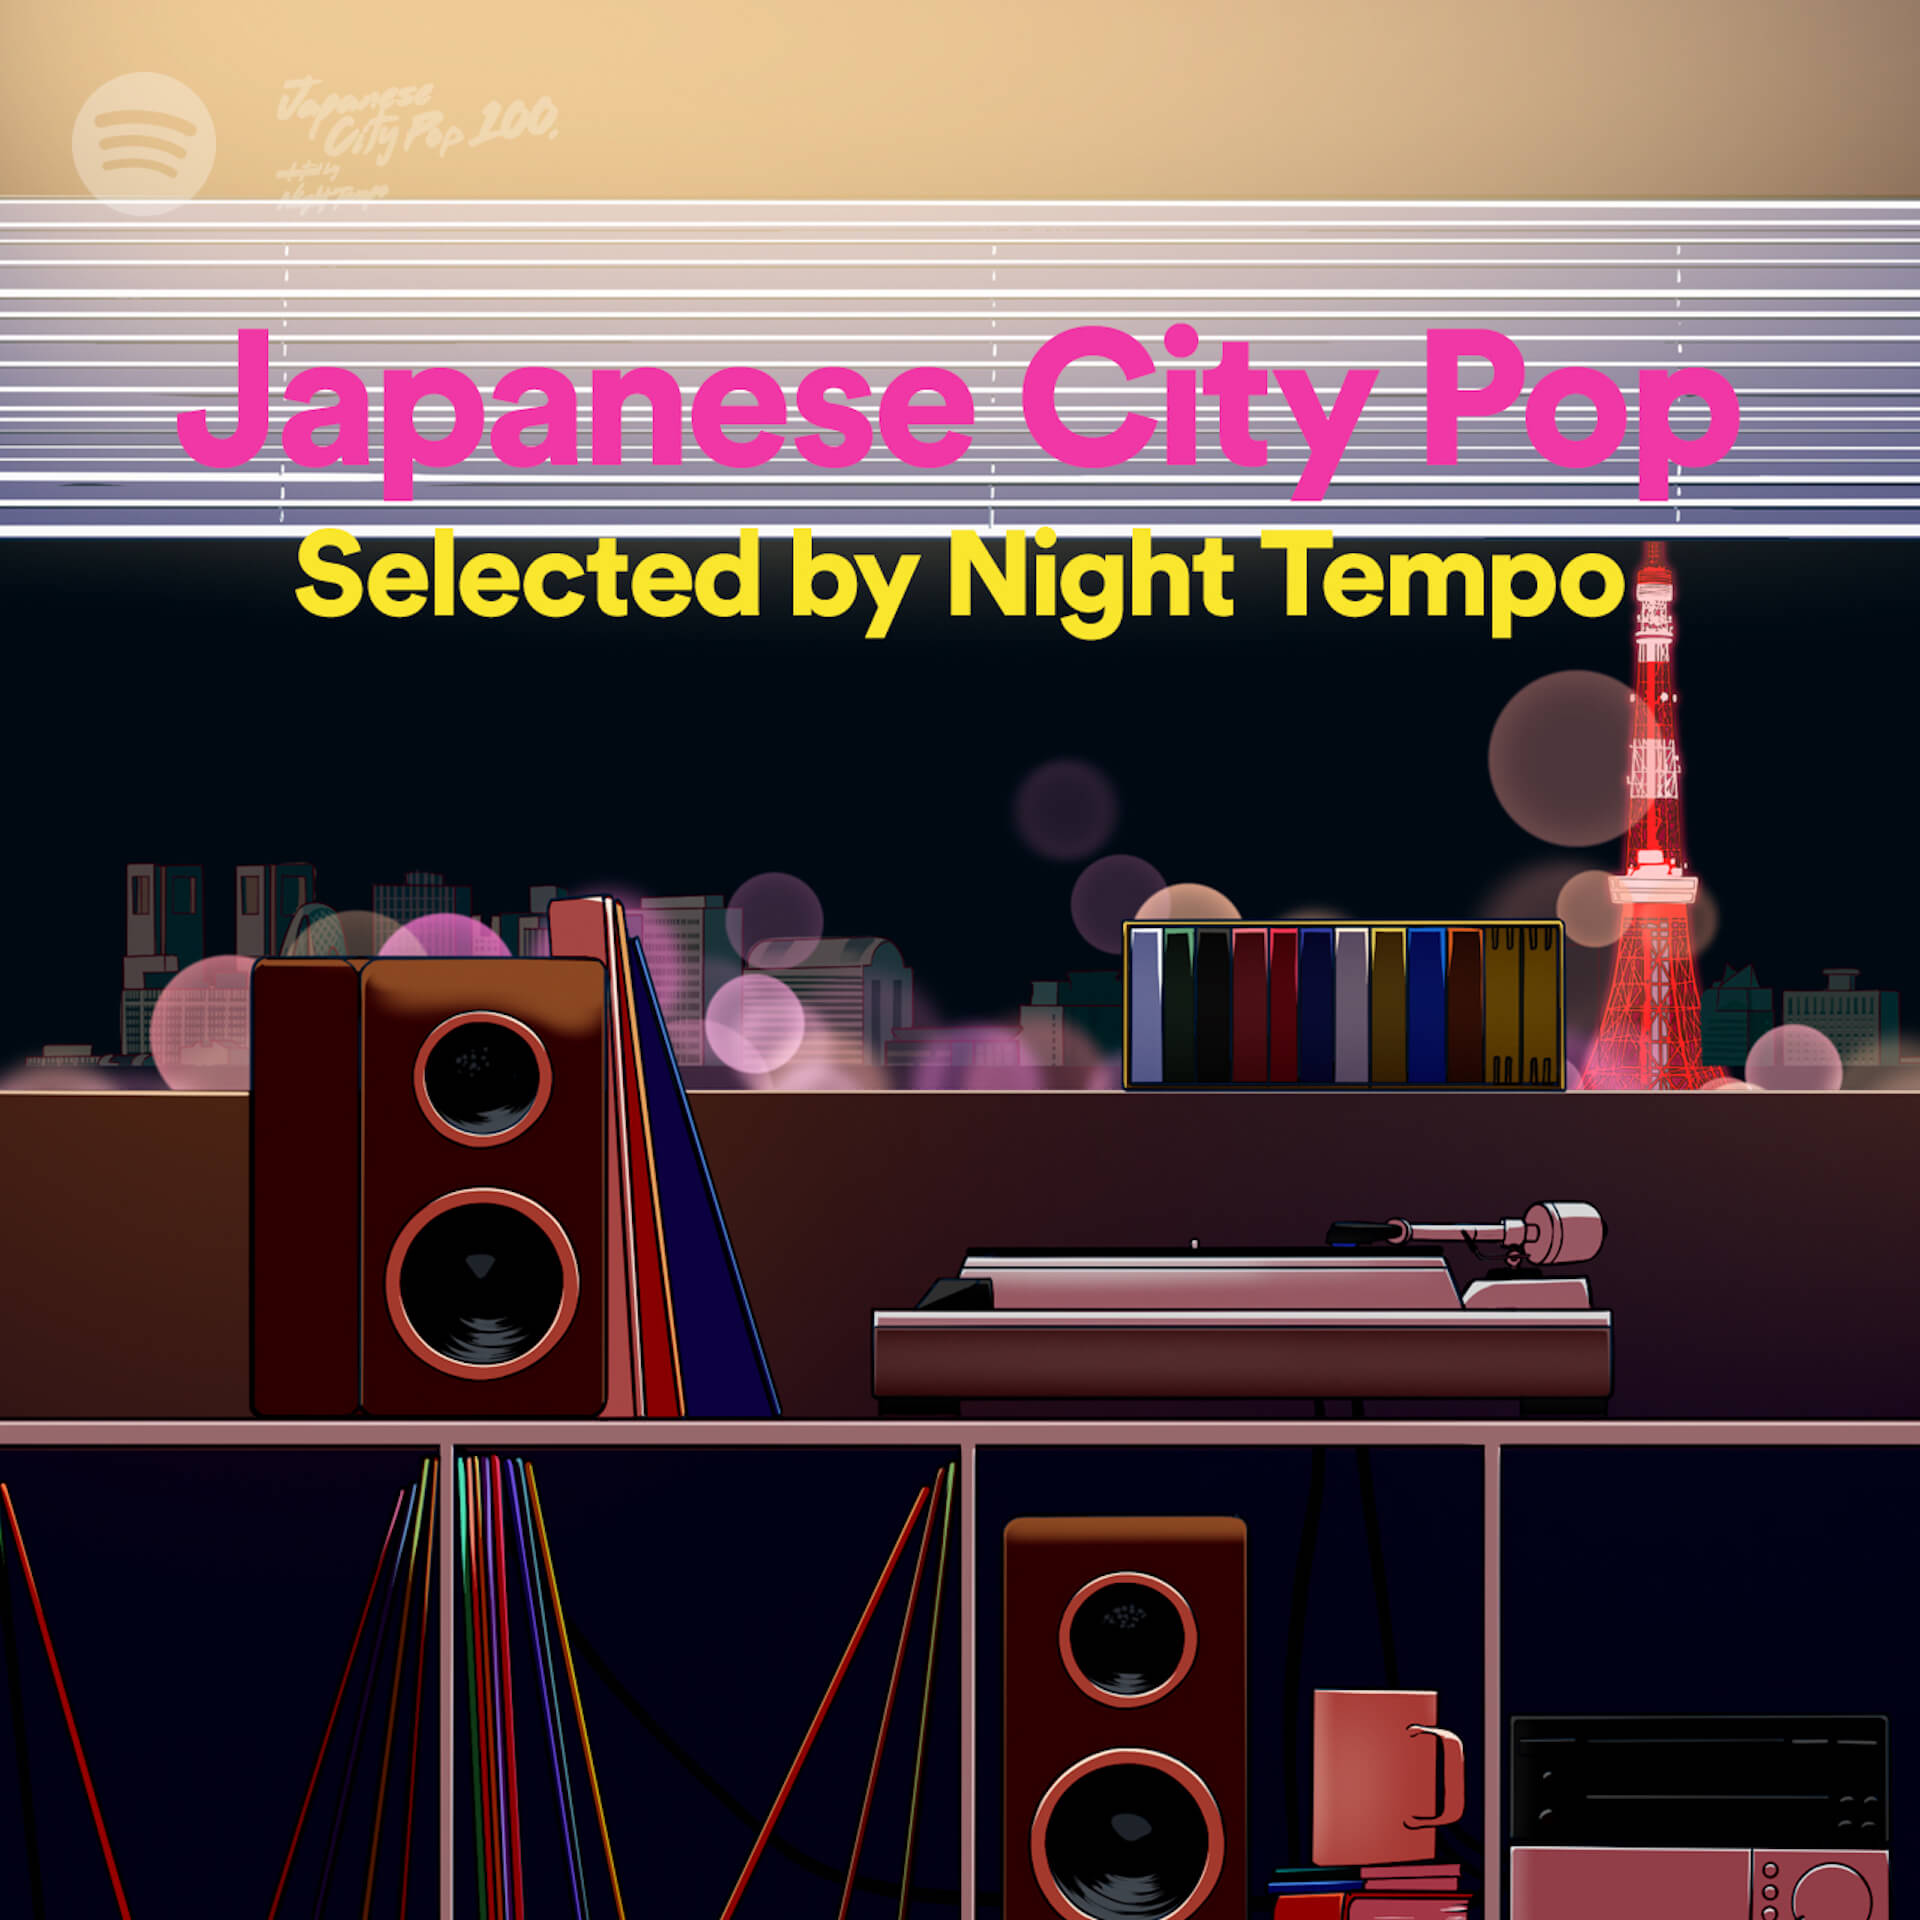 Night Tempoが厳選した100曲を紹介する書籍『Japanese City Pop 100, selected by Night Tempo』が本日発売！ music_220201_nighttempo_05